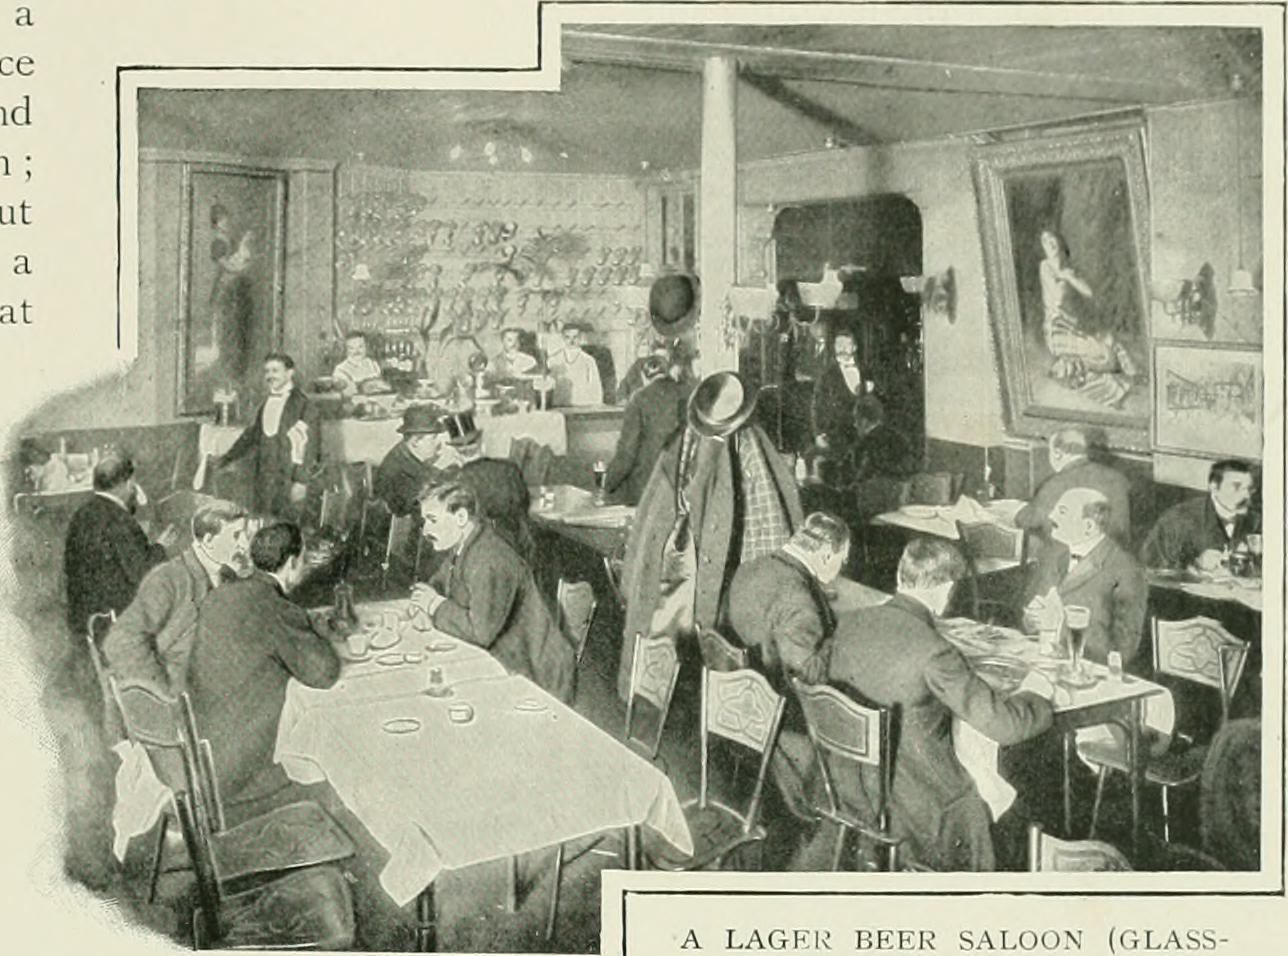 Les gens de Londres: combats, nourriture et filles d'usine - 1902